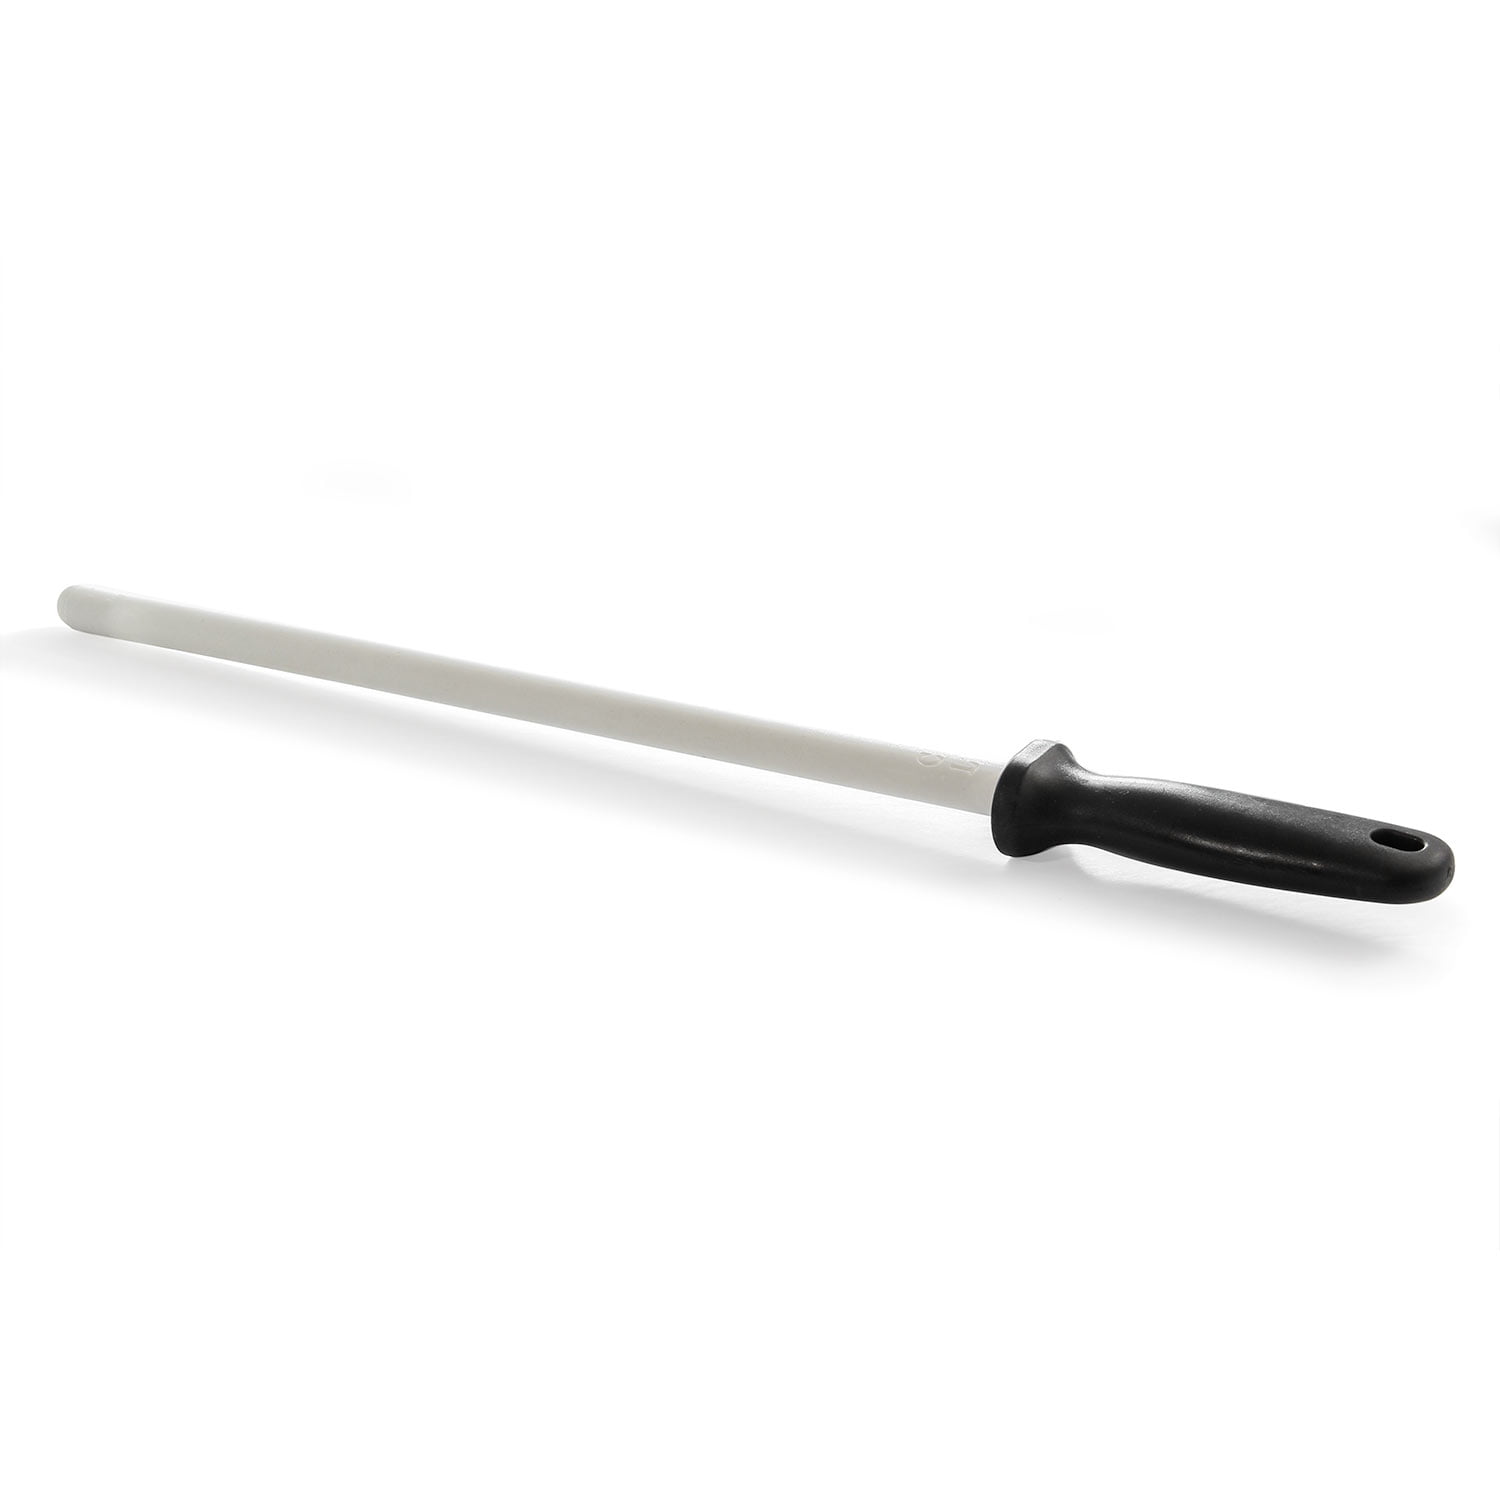 Biltek 12 Ceramic Sharpening Rod Stick Sharpener with ABS Handle